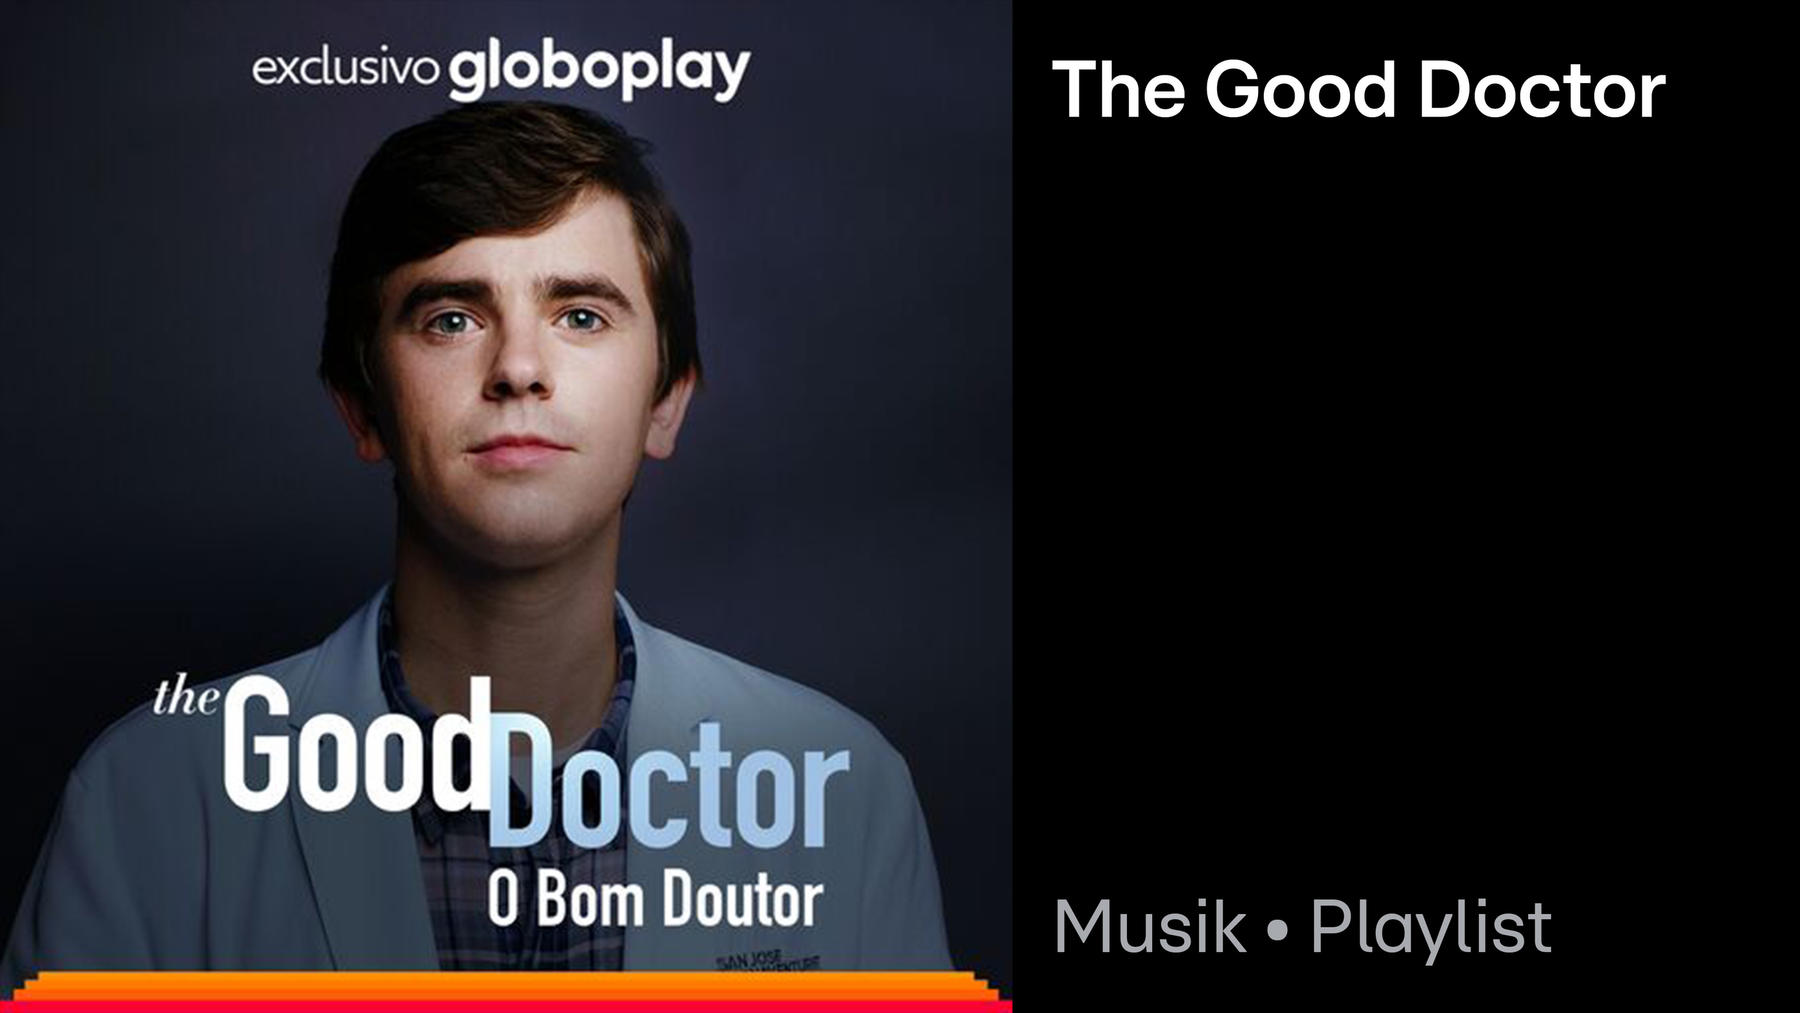 The Good Doctor Playlist